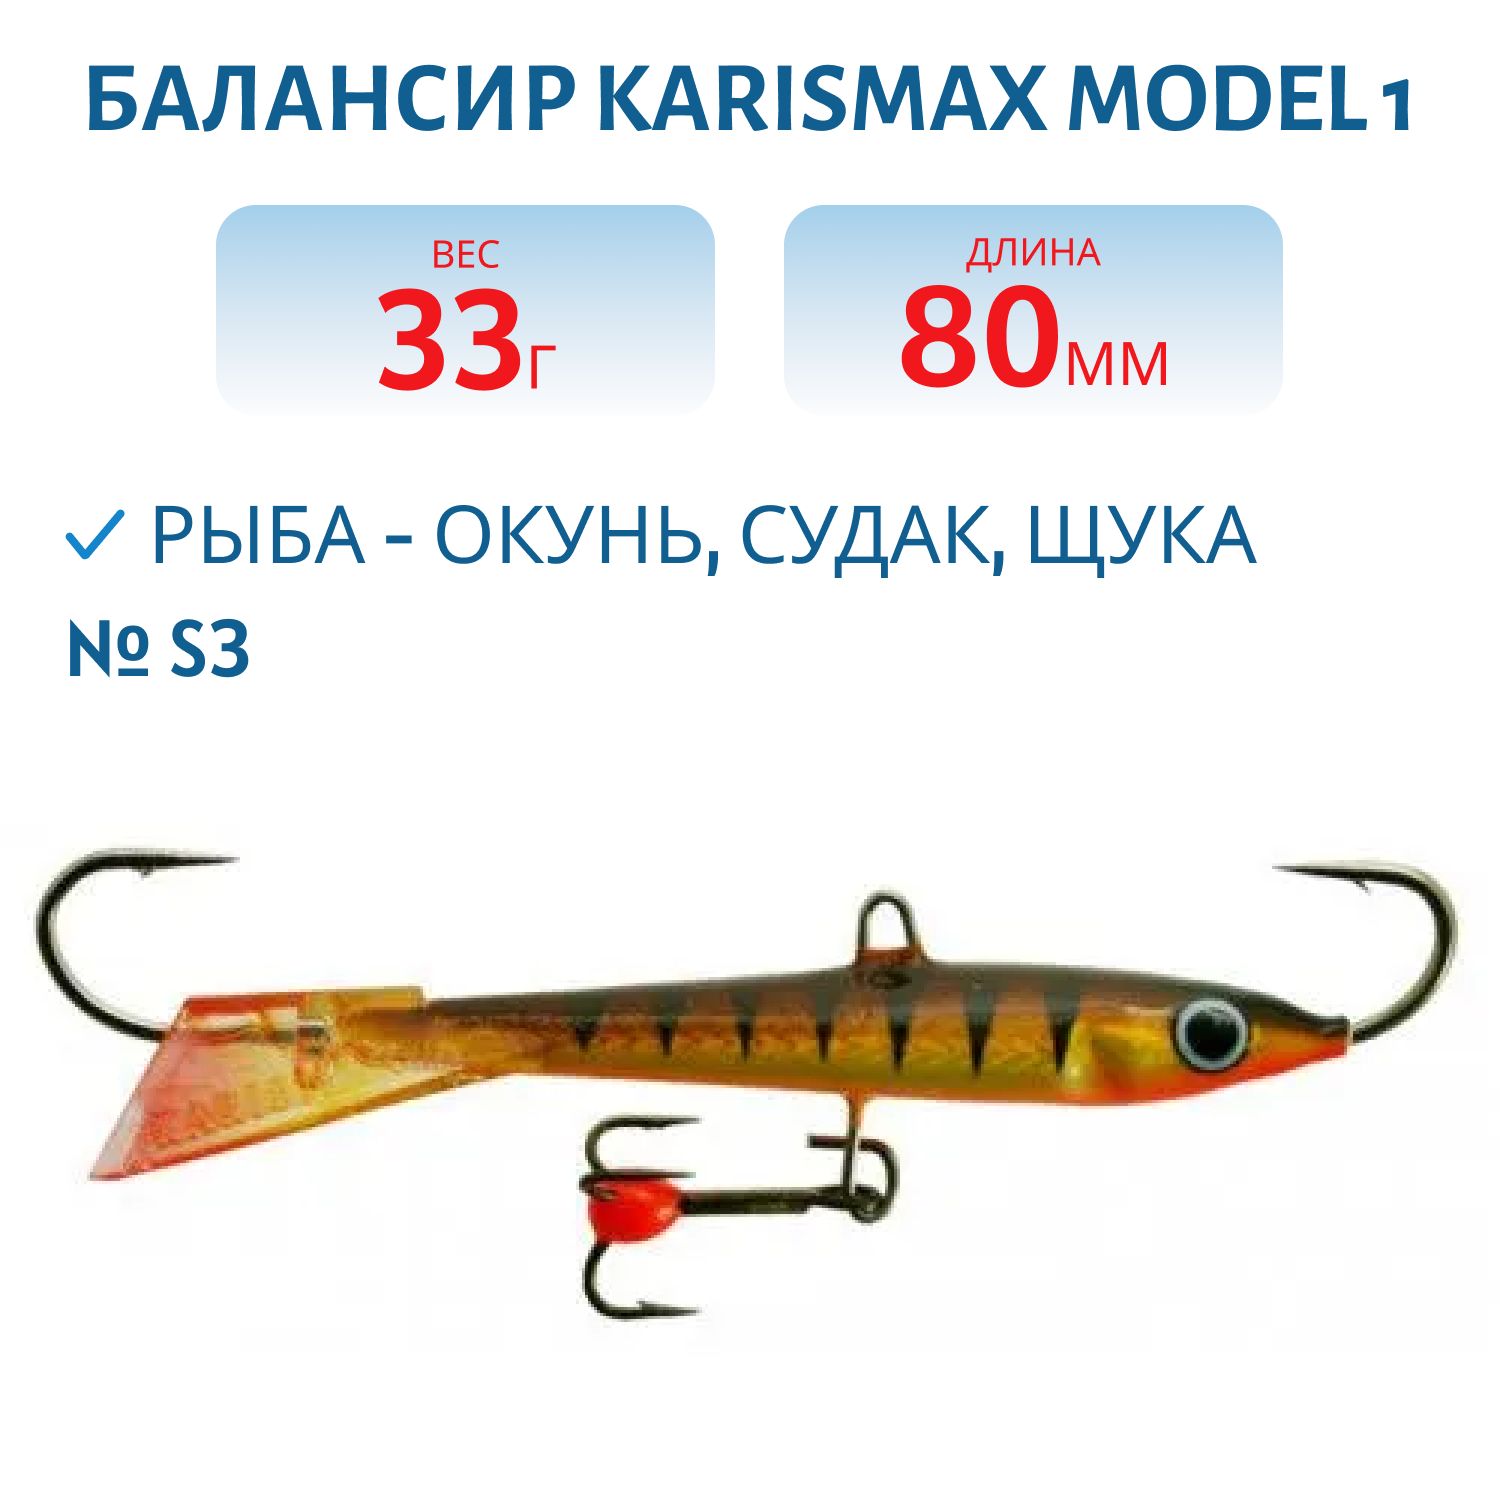 Балансир KARISMAX MODEL 1 COLOR S3